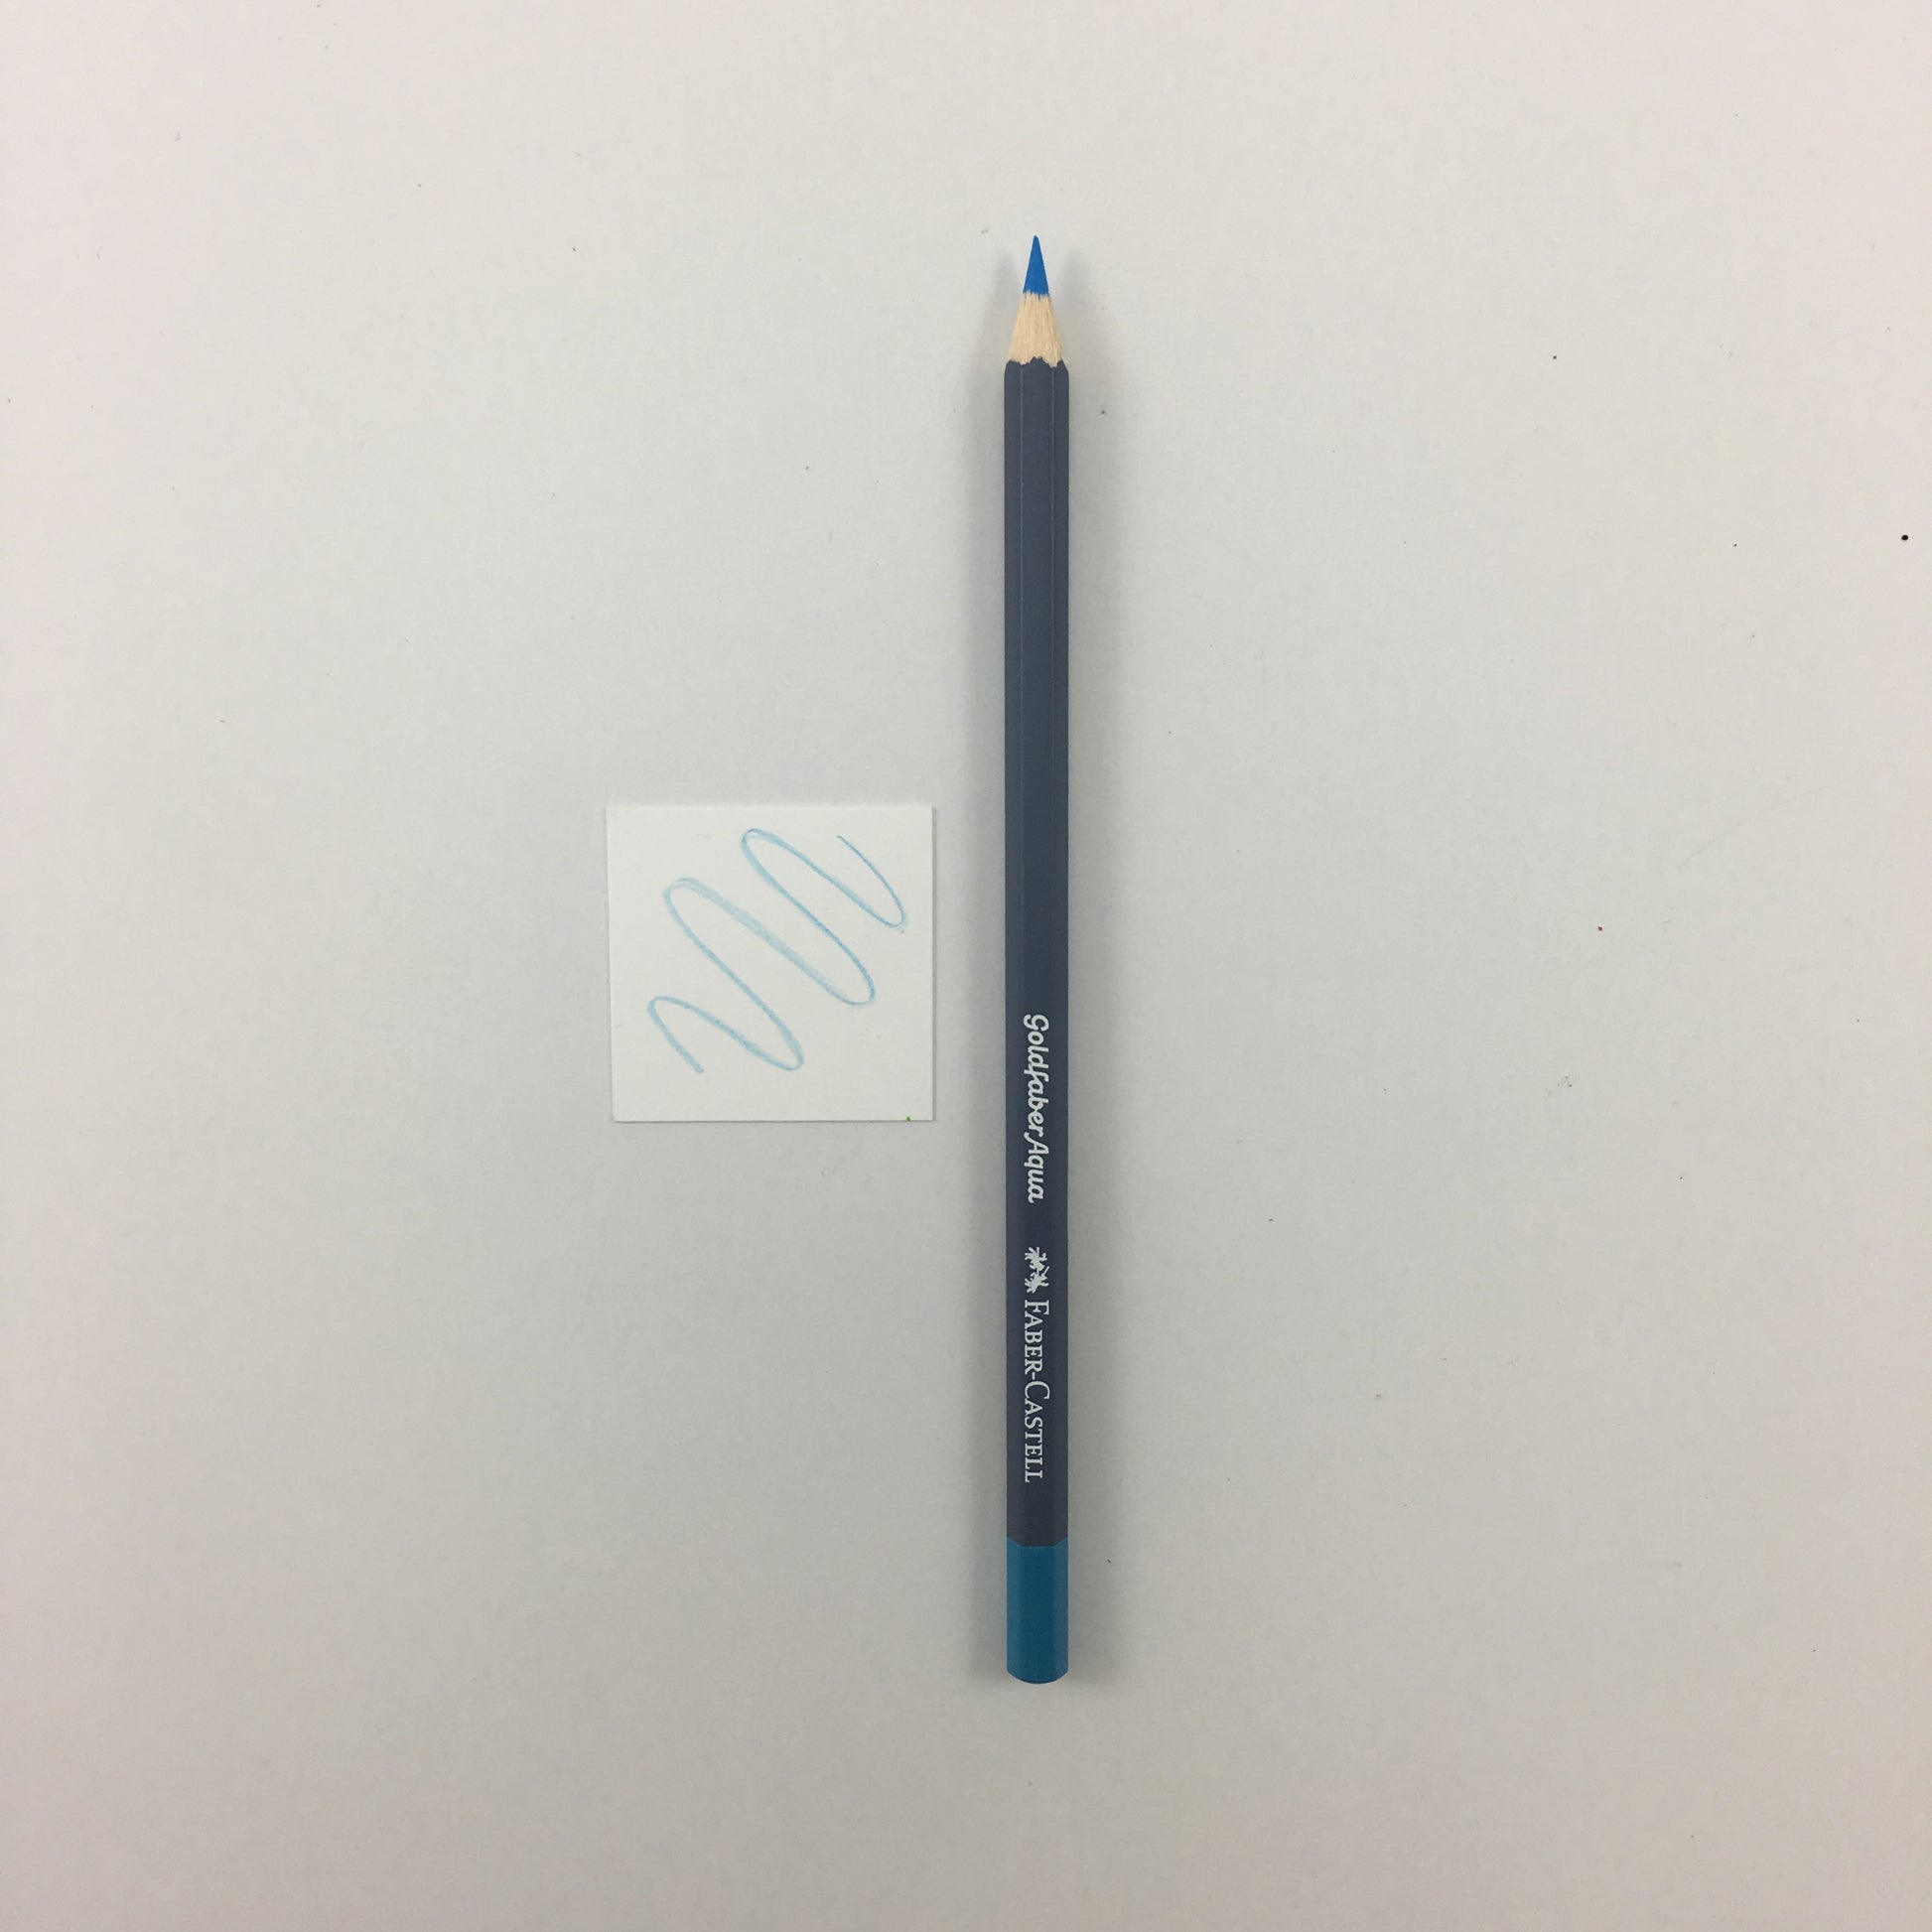 Faber-Castell Goldfaber Aqua Watercolor Pencils - Individuals - 147 - Light Blue by Faber-Castell - K. A. Artist Shop